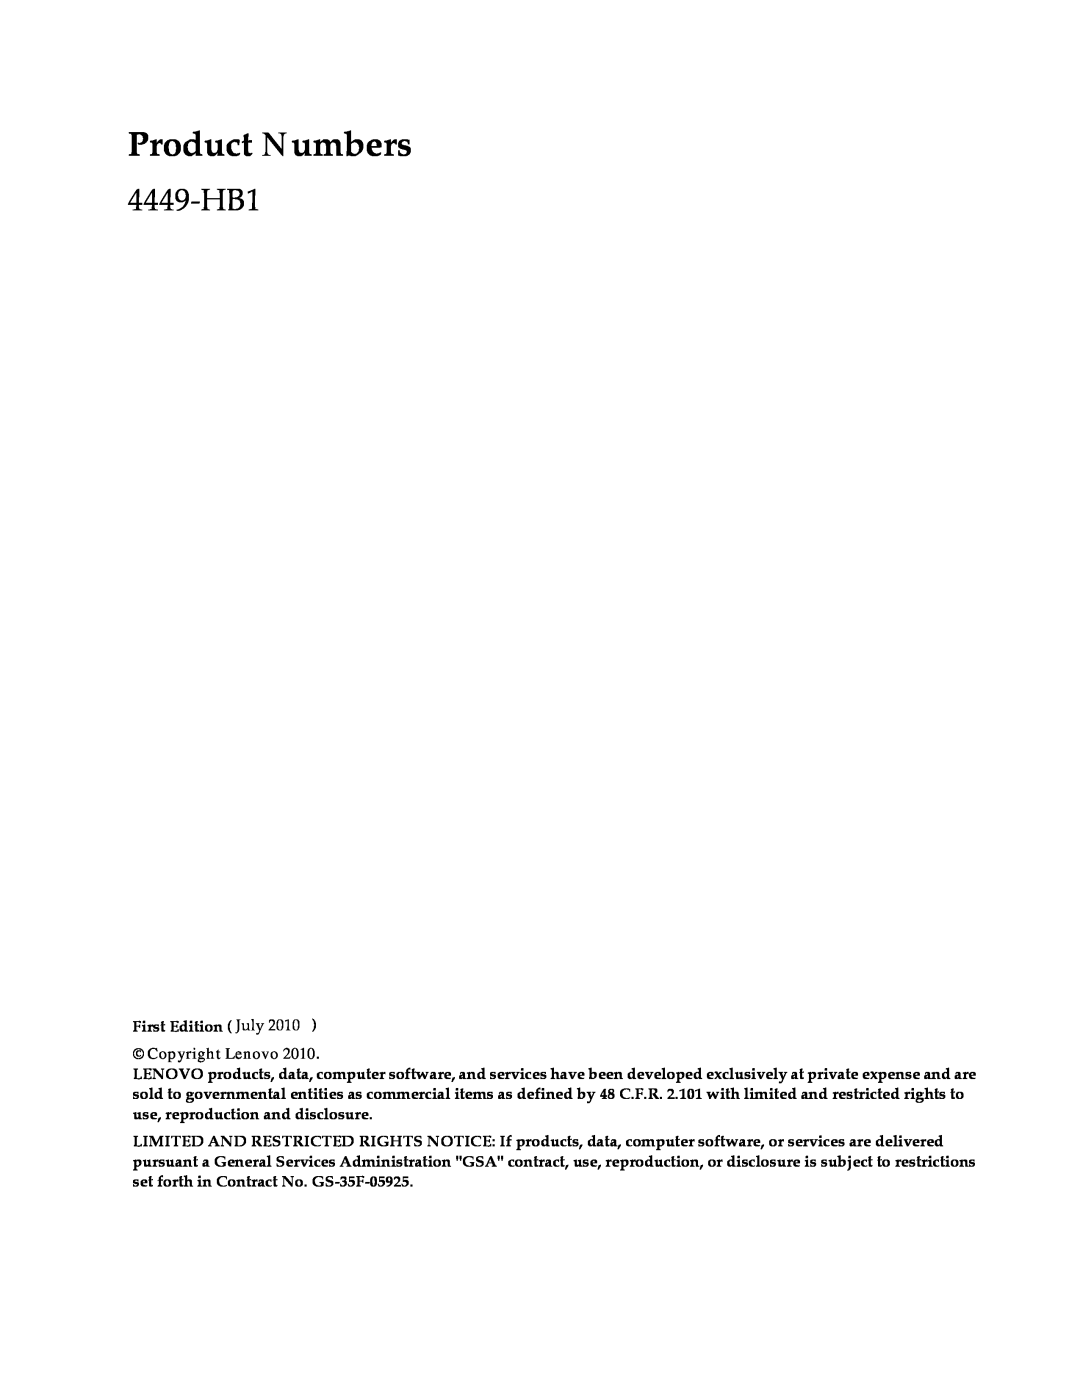 Lenovo L2021 manual Product Numbers, 4449-HB1, Copyright Lenovo 